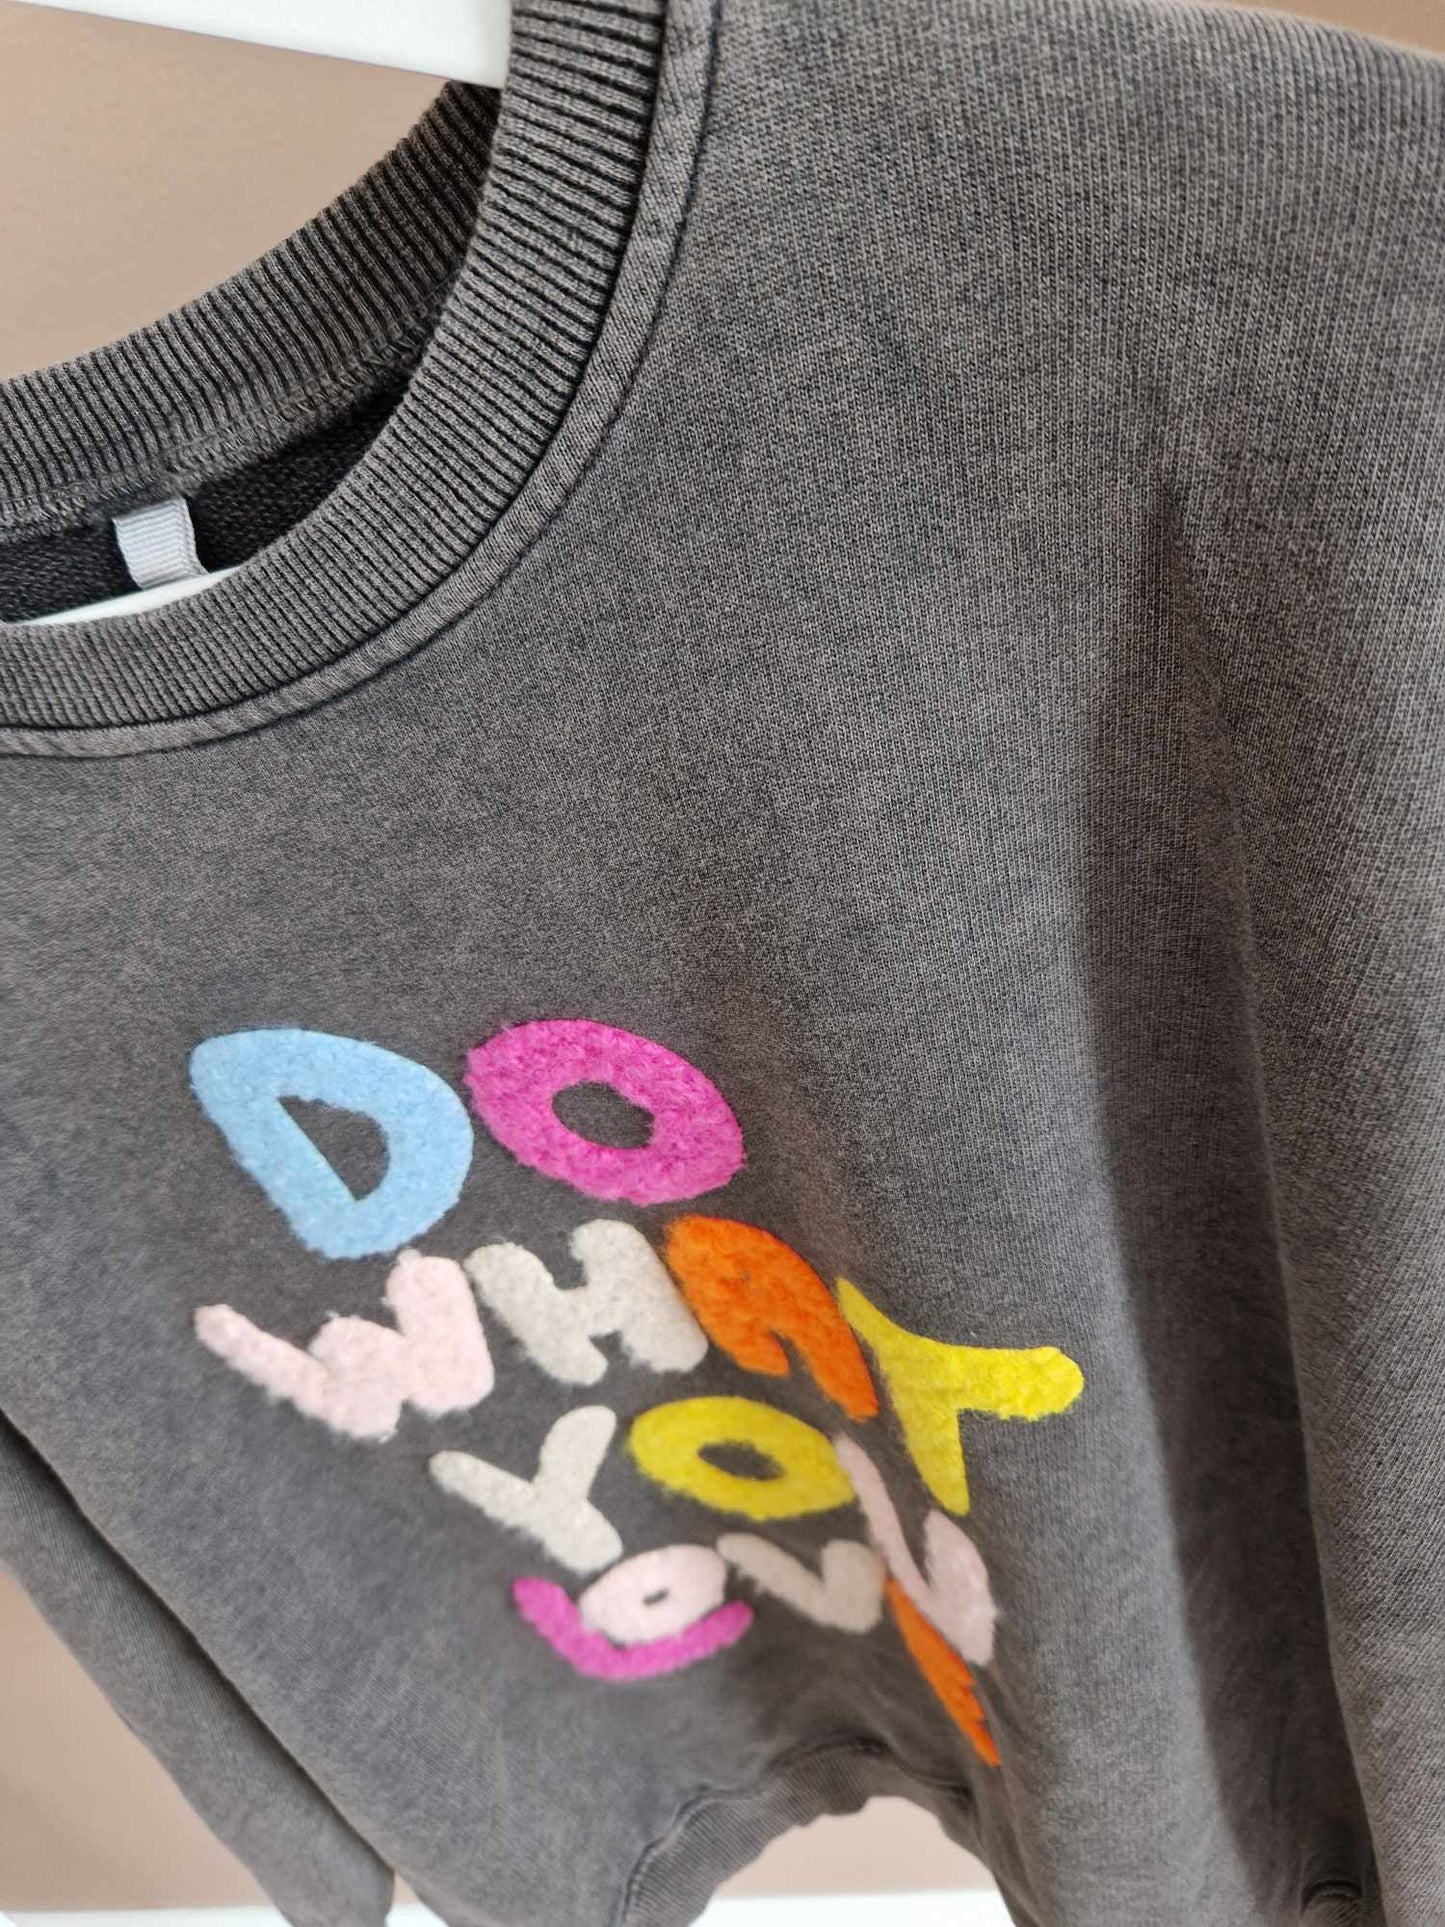 Sweatshirt - Do what you love